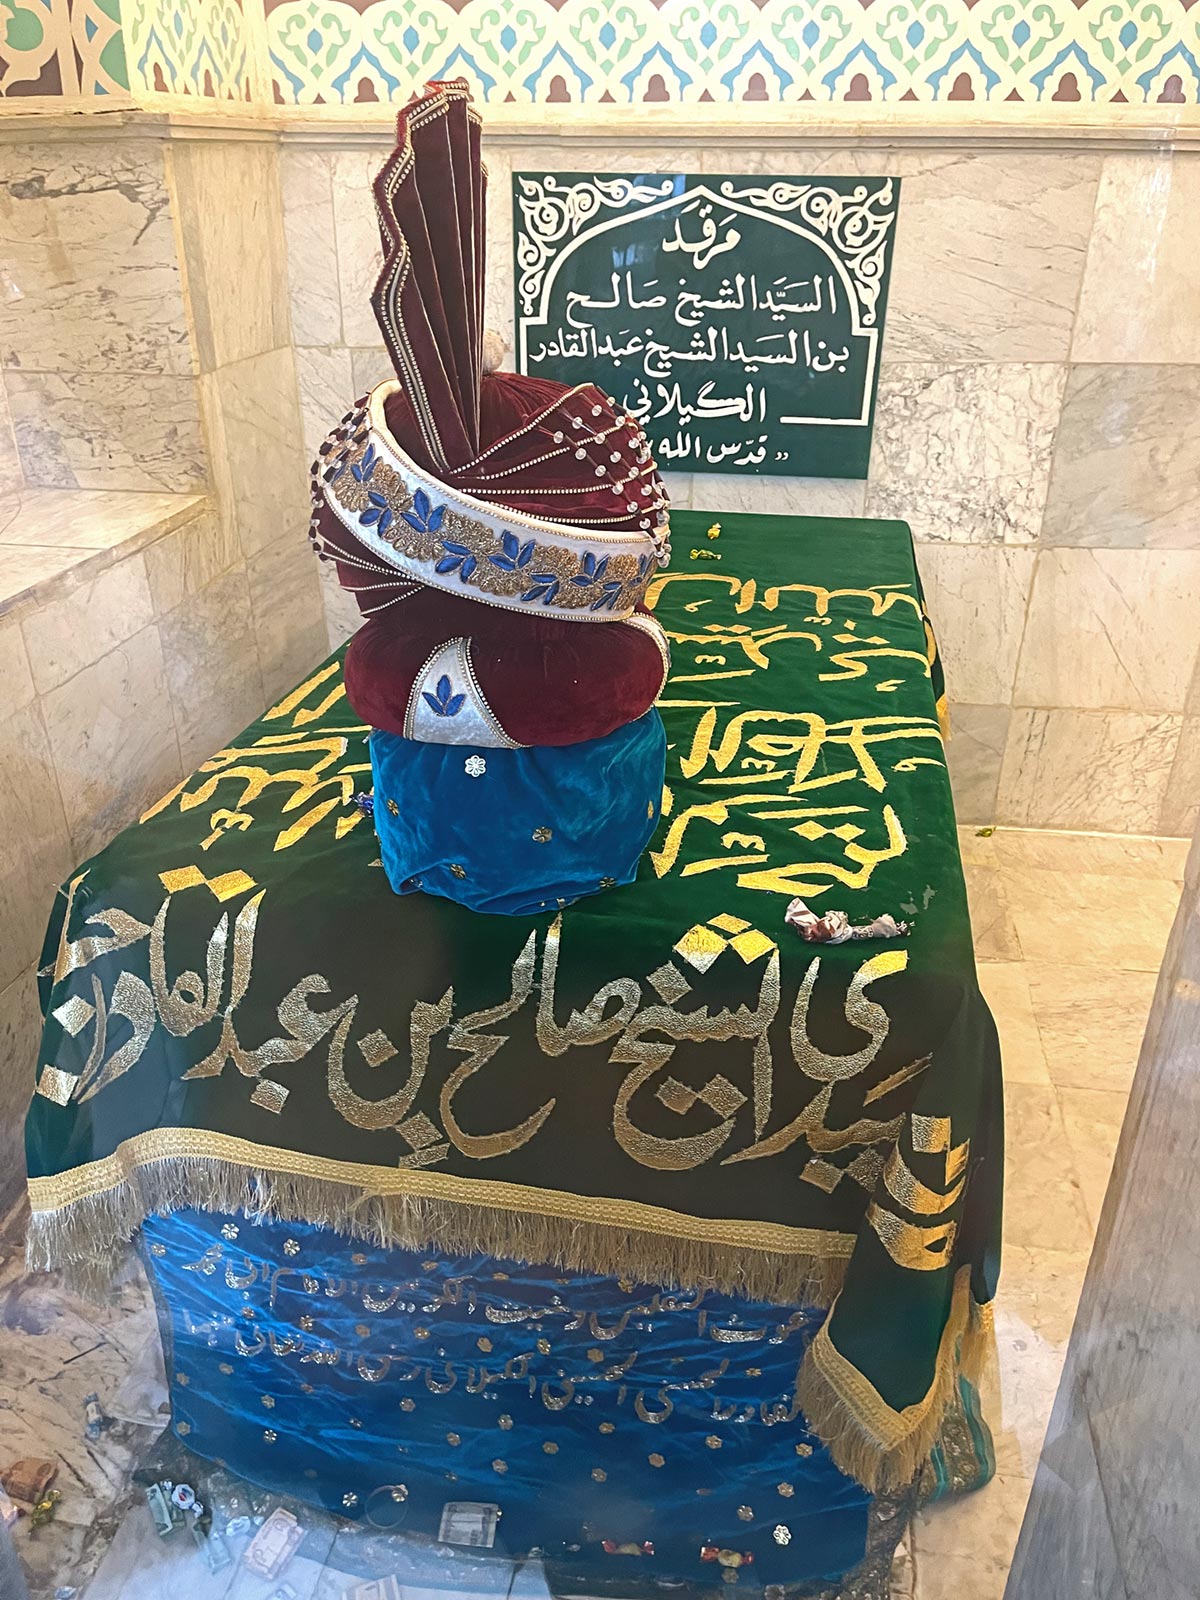 Tomb of Sheikh Salih, the son of Abdul Qadir Gilani, at the Mausoleum of Abdul Qadir Gilani, Baghdad